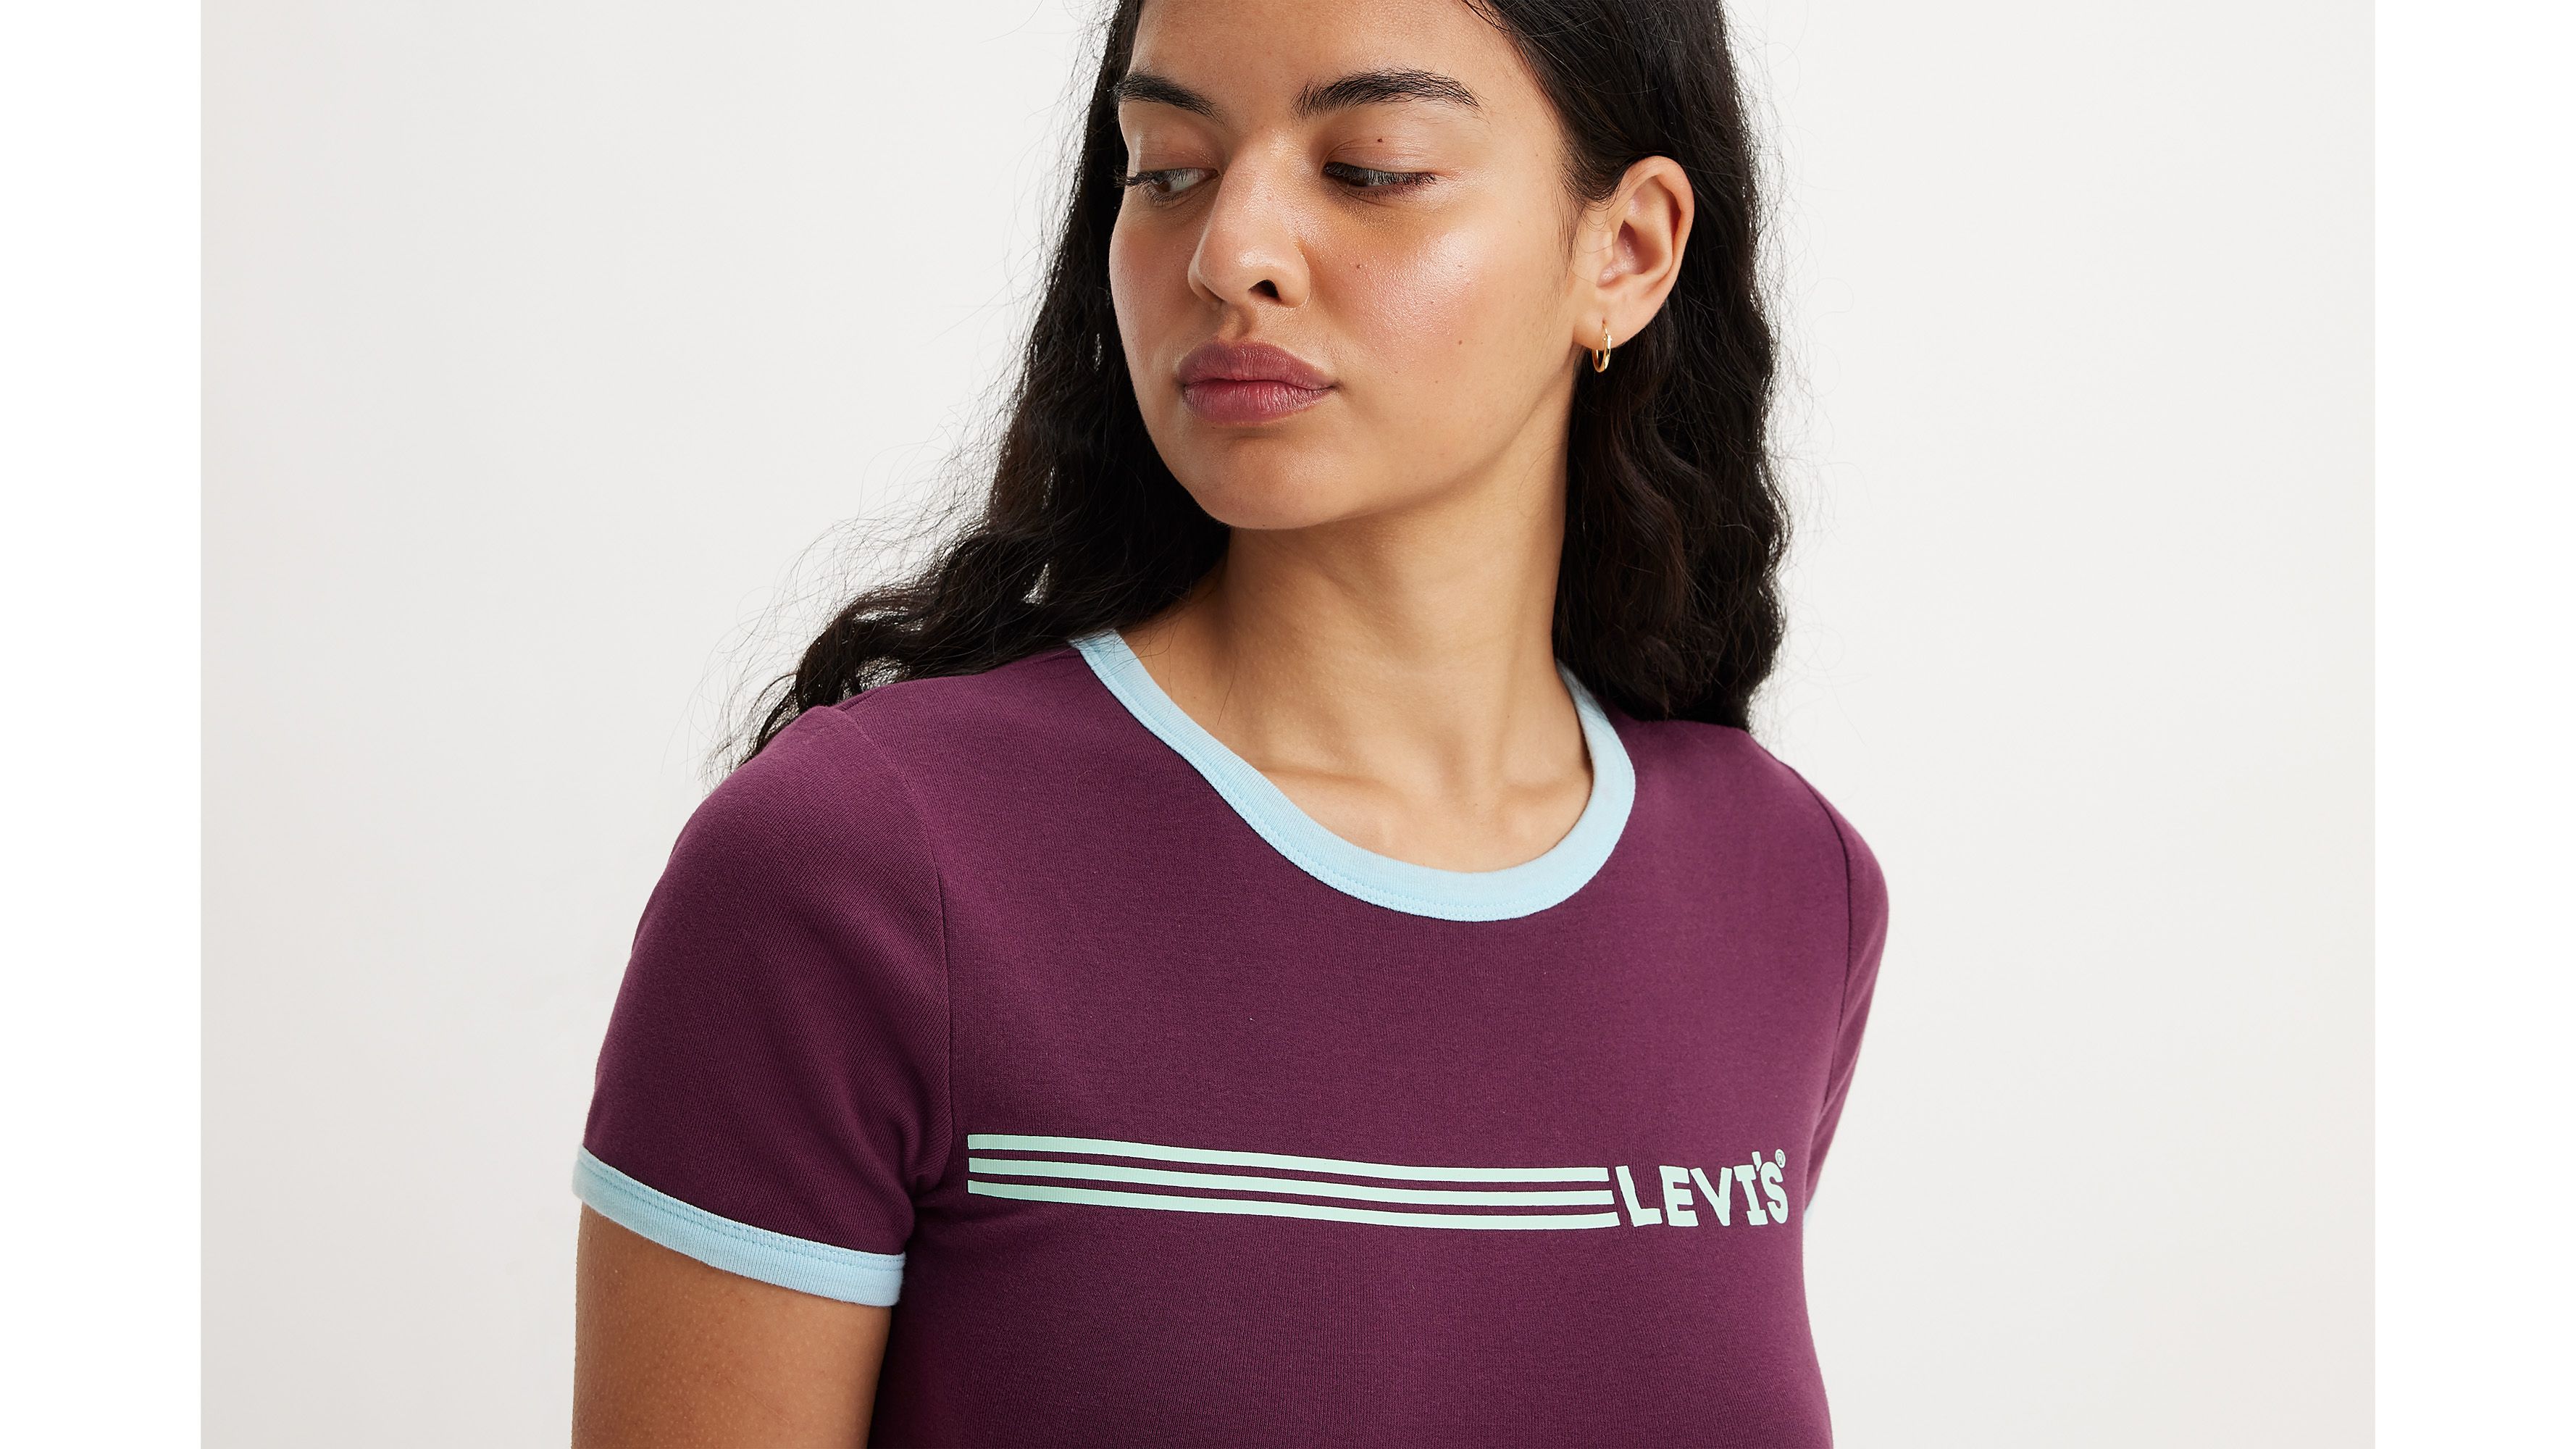 GFWC Florida – Purple Bling Shirt Limited Supply (Medium Only